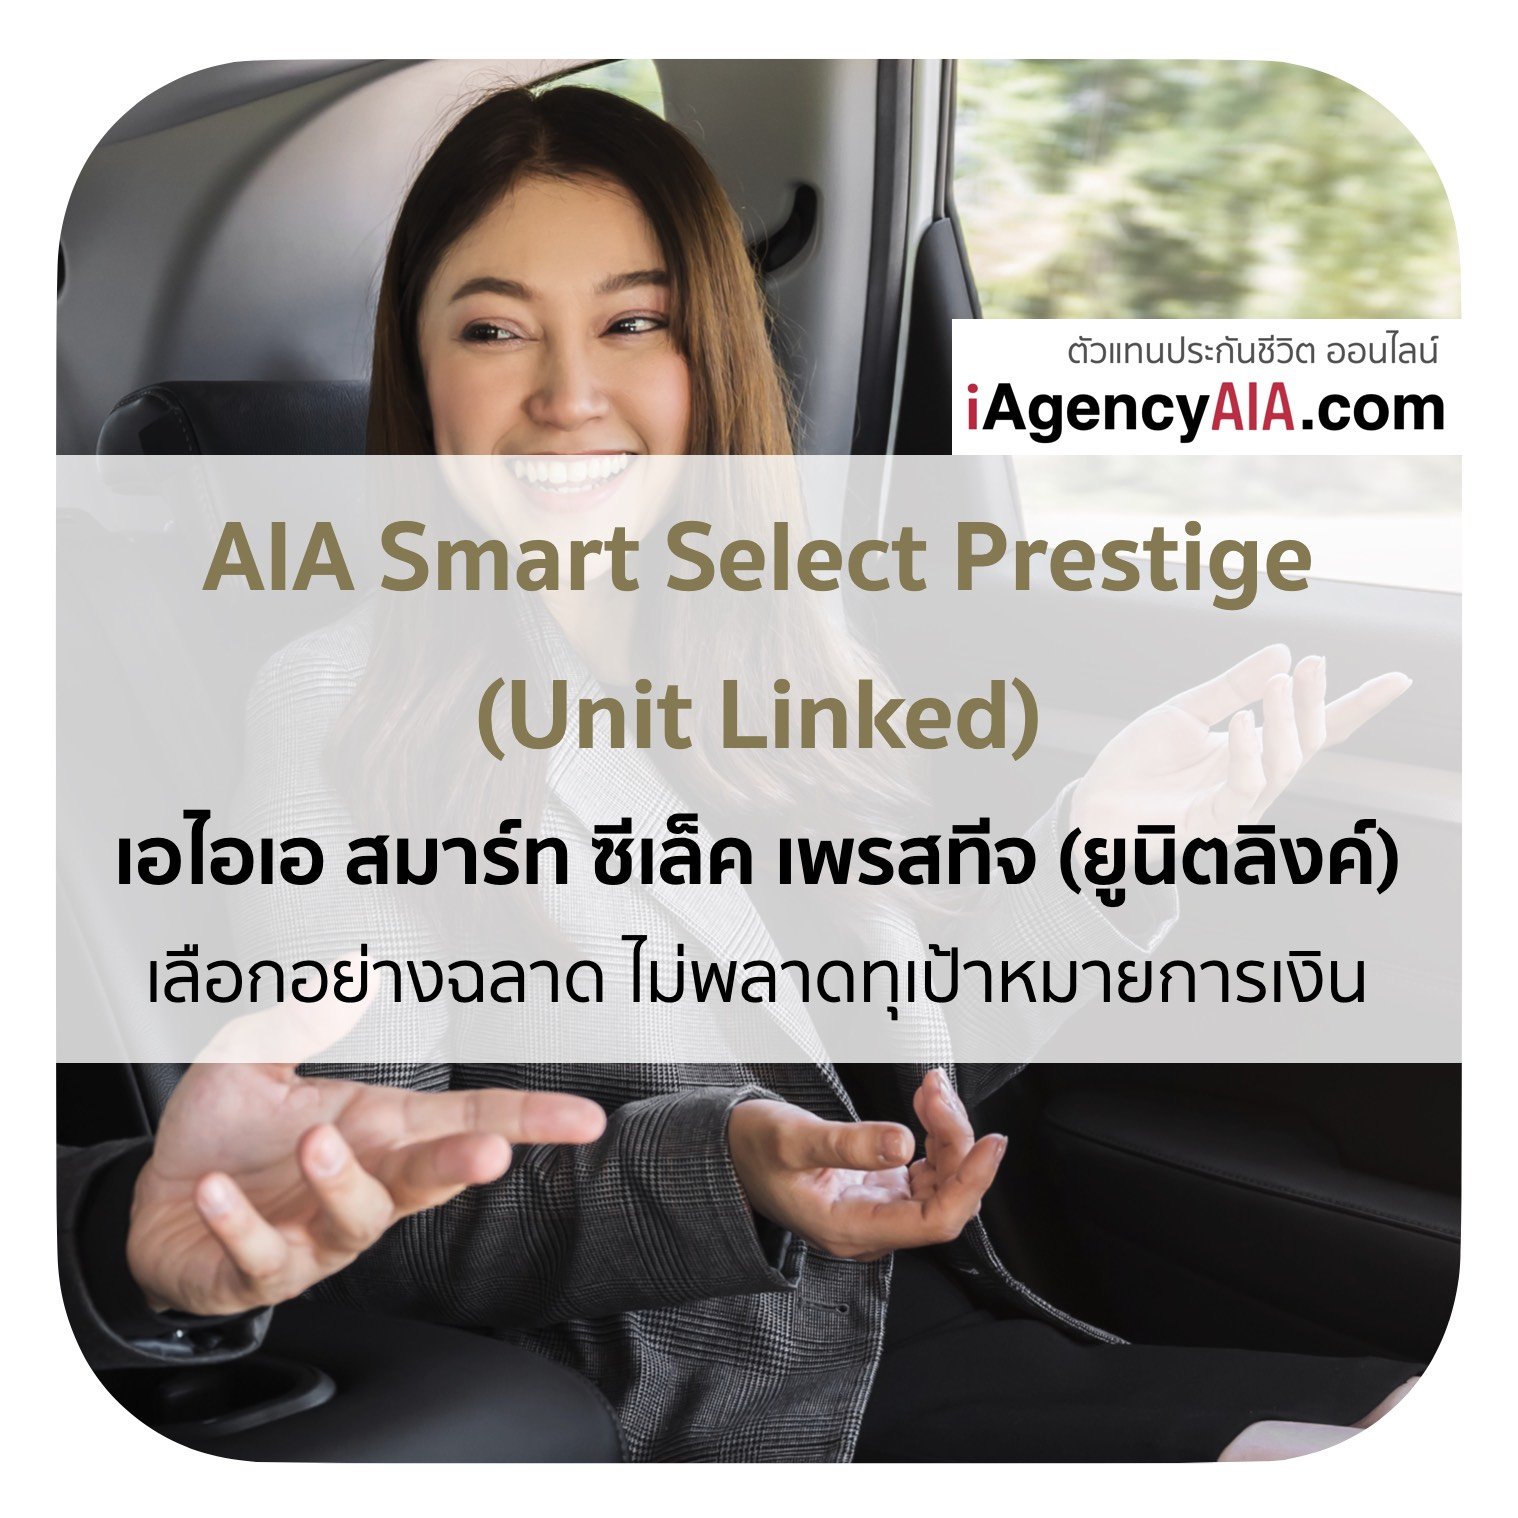 AIA สะสมทรัพย์ Smart Select Prestige (Unit Linked)